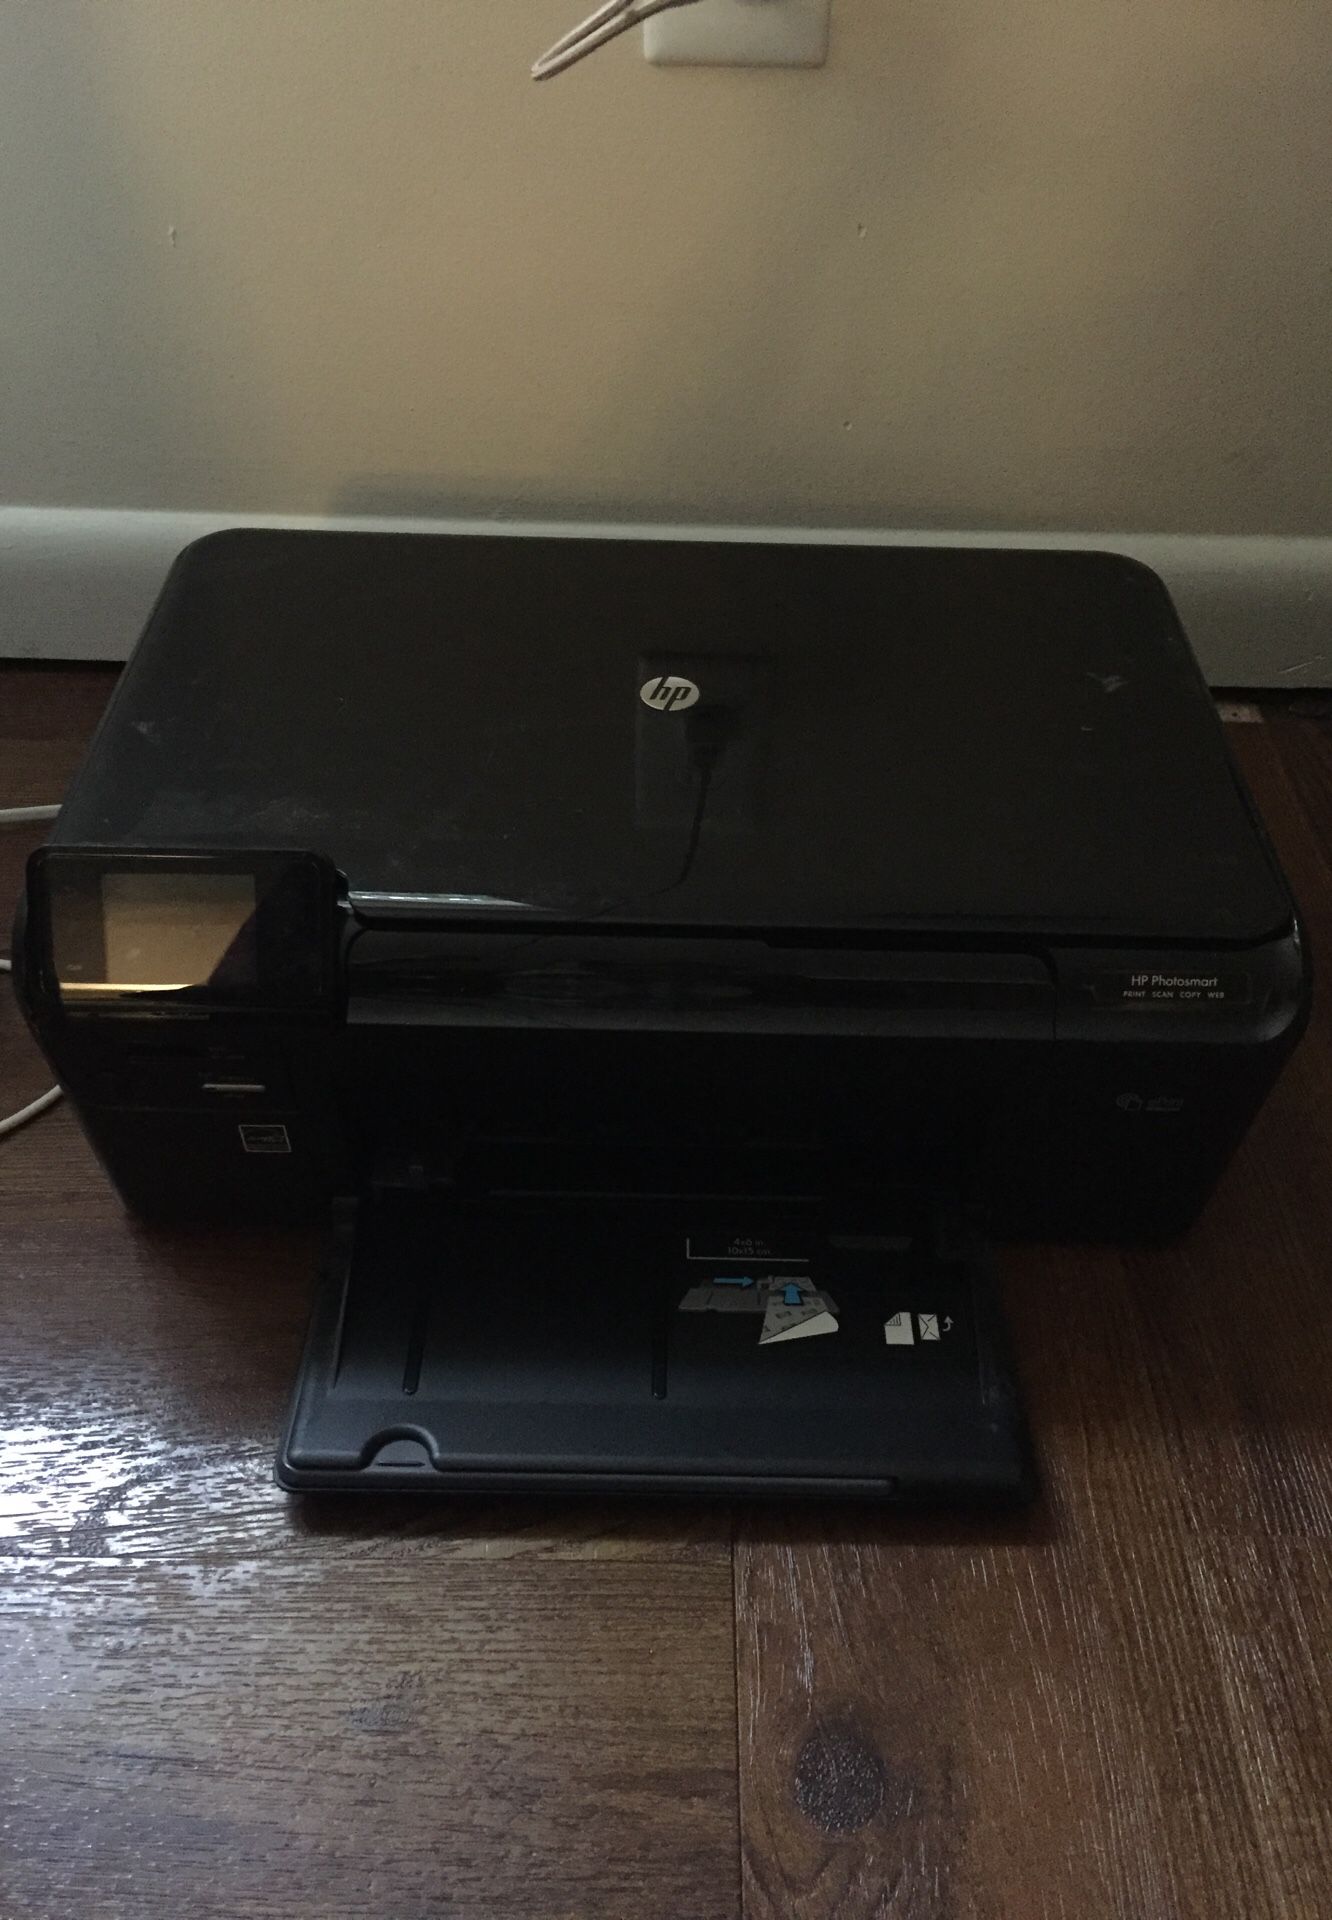 HP Photosmart D110 Series Printer with Color Cartridge